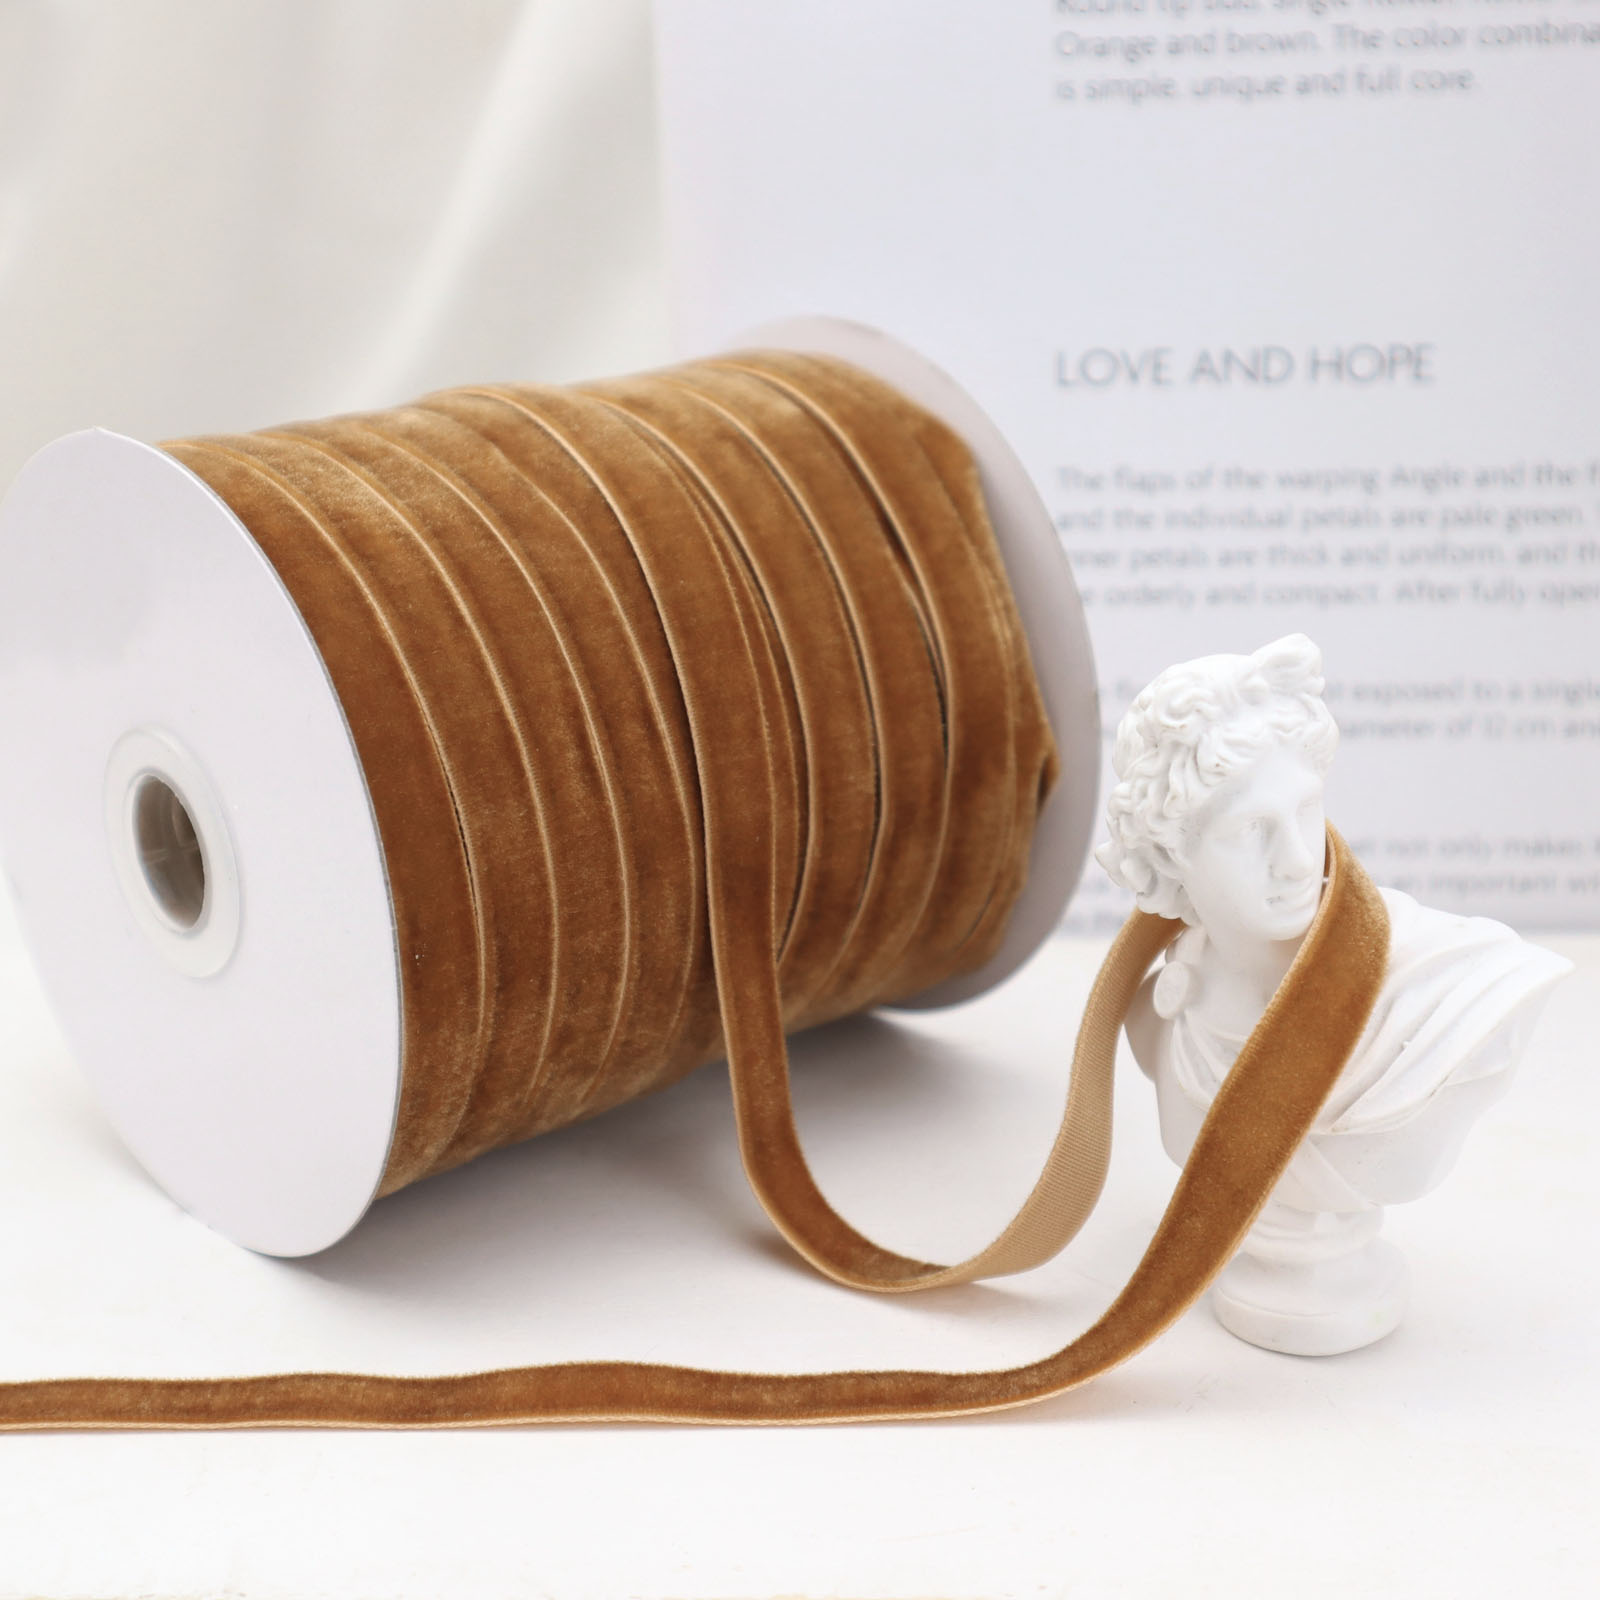 Kewgarden 1.5 1 10mm 25mm 40mm Matte Fabric Layering Cloth Ribbon DIY  Hair Bow tie Accessories